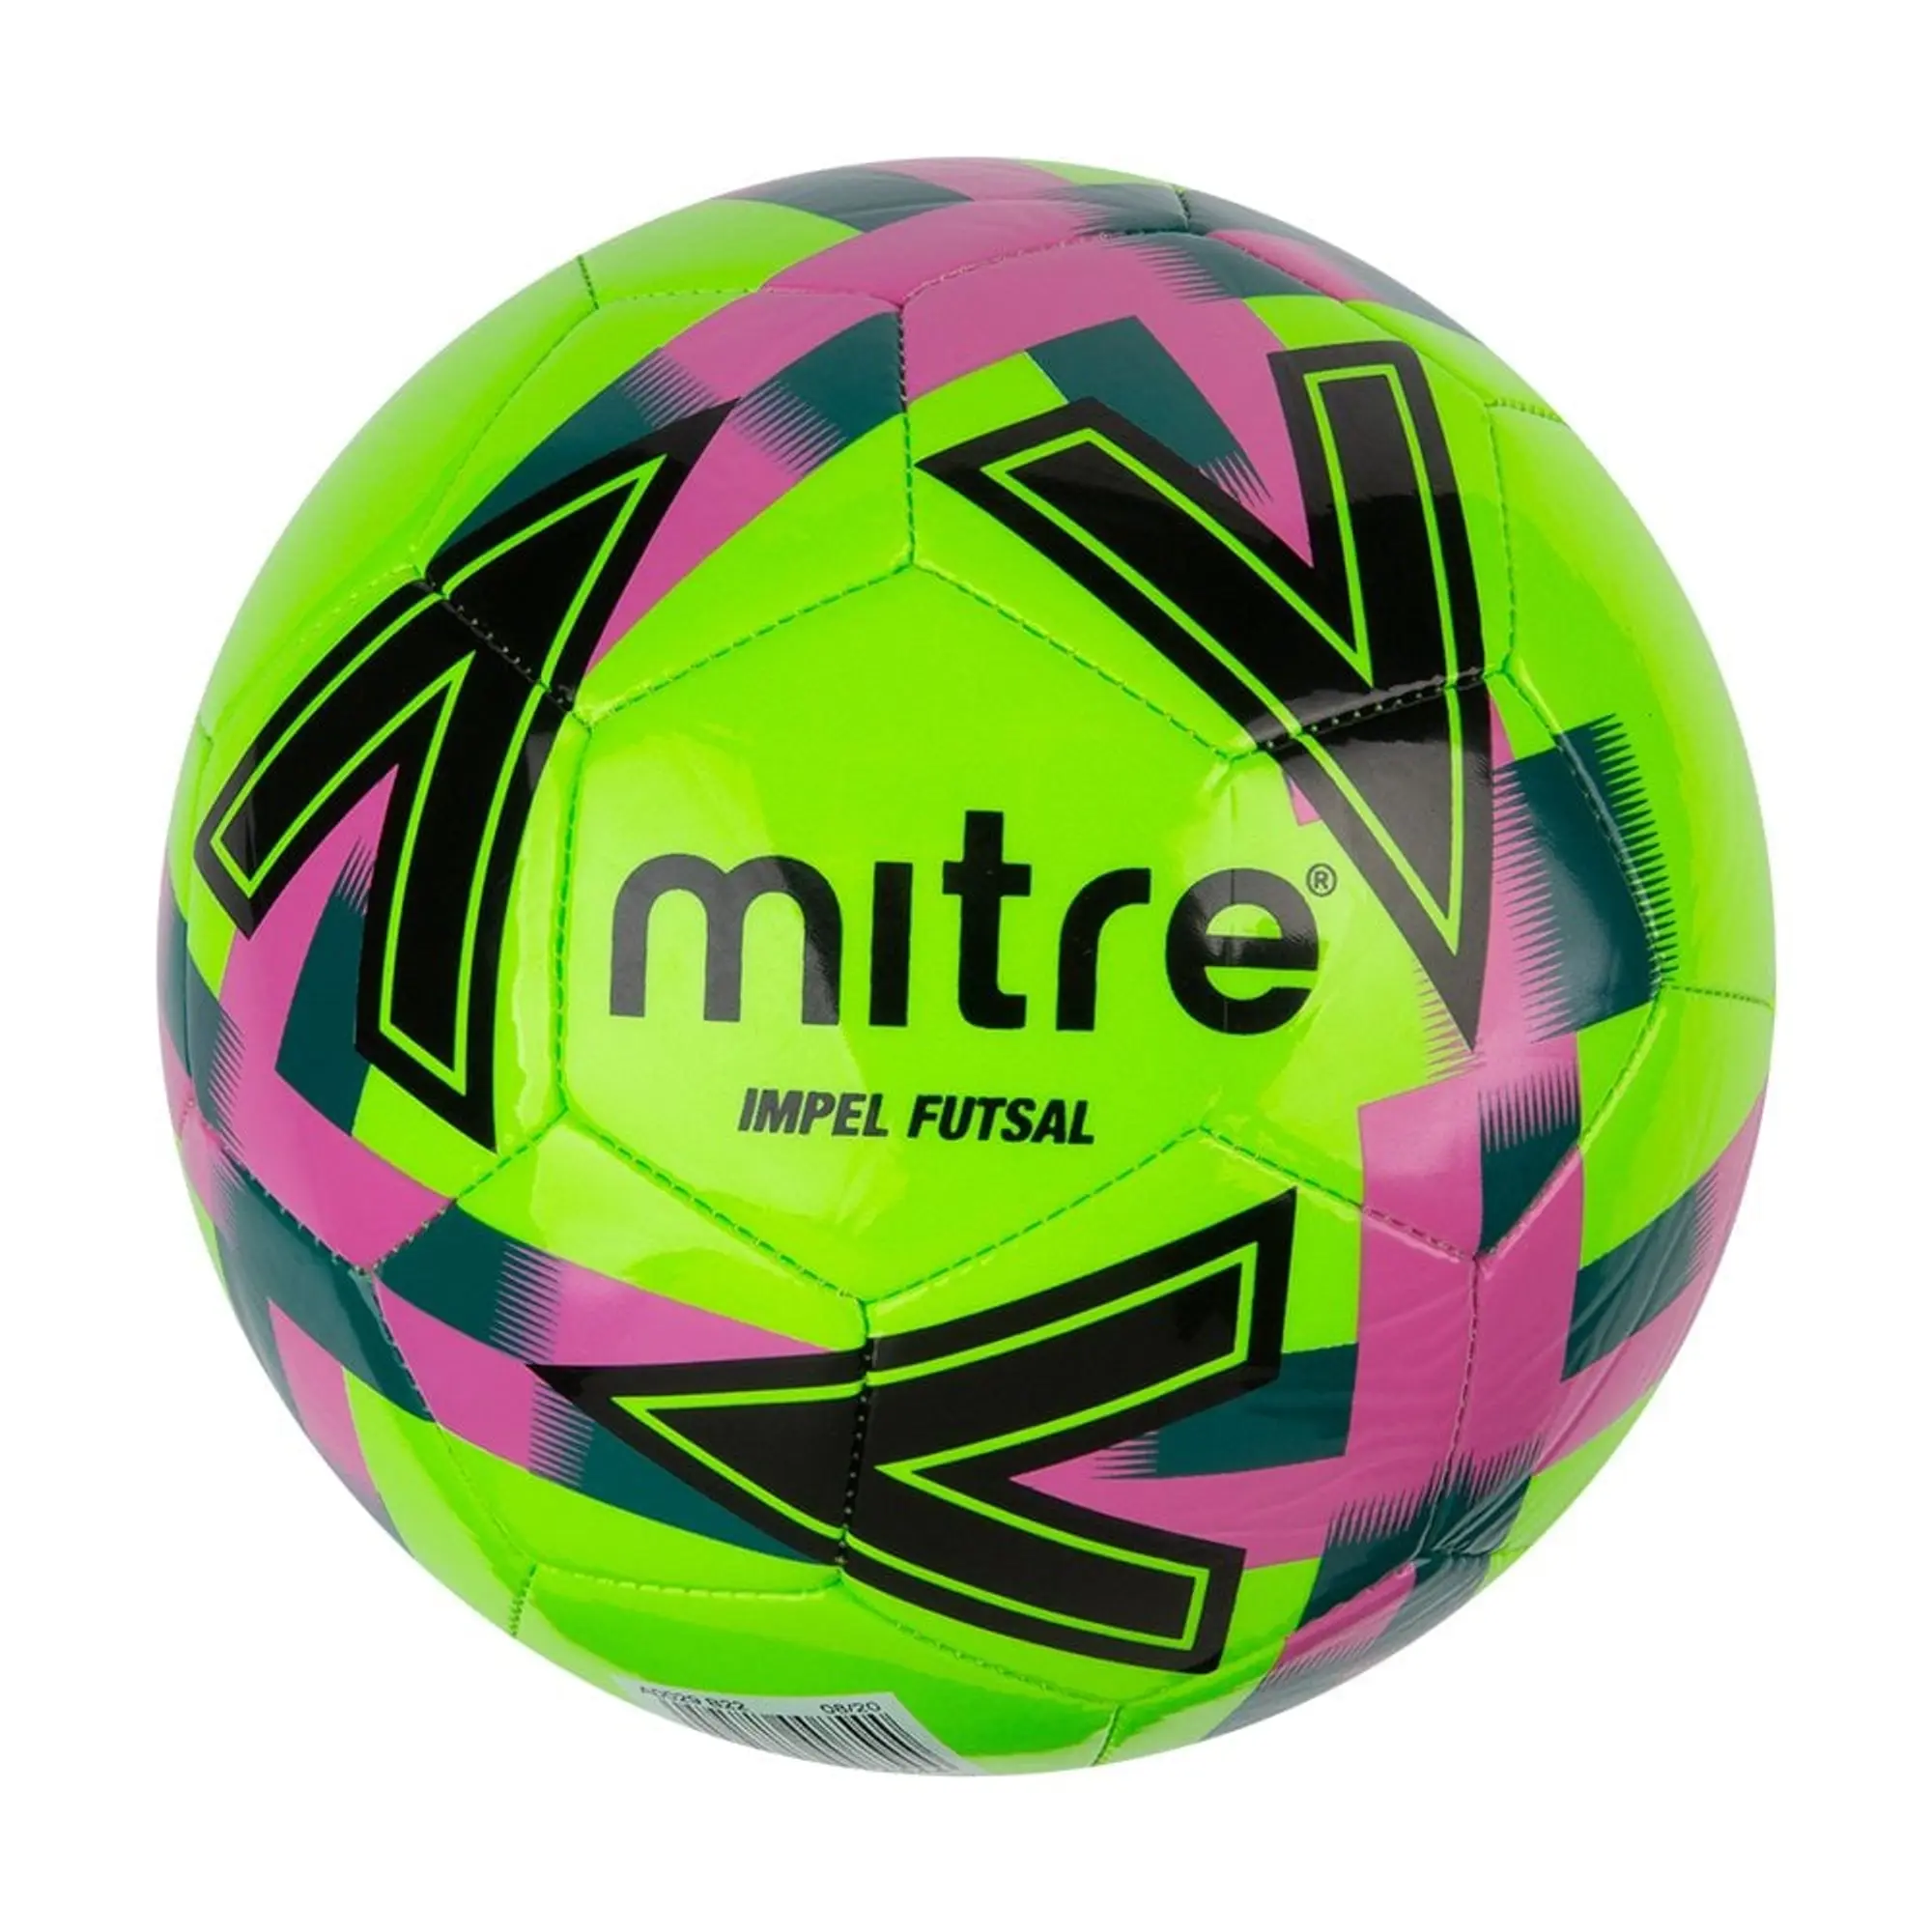 Mitre Impel Futsal Lite - Green